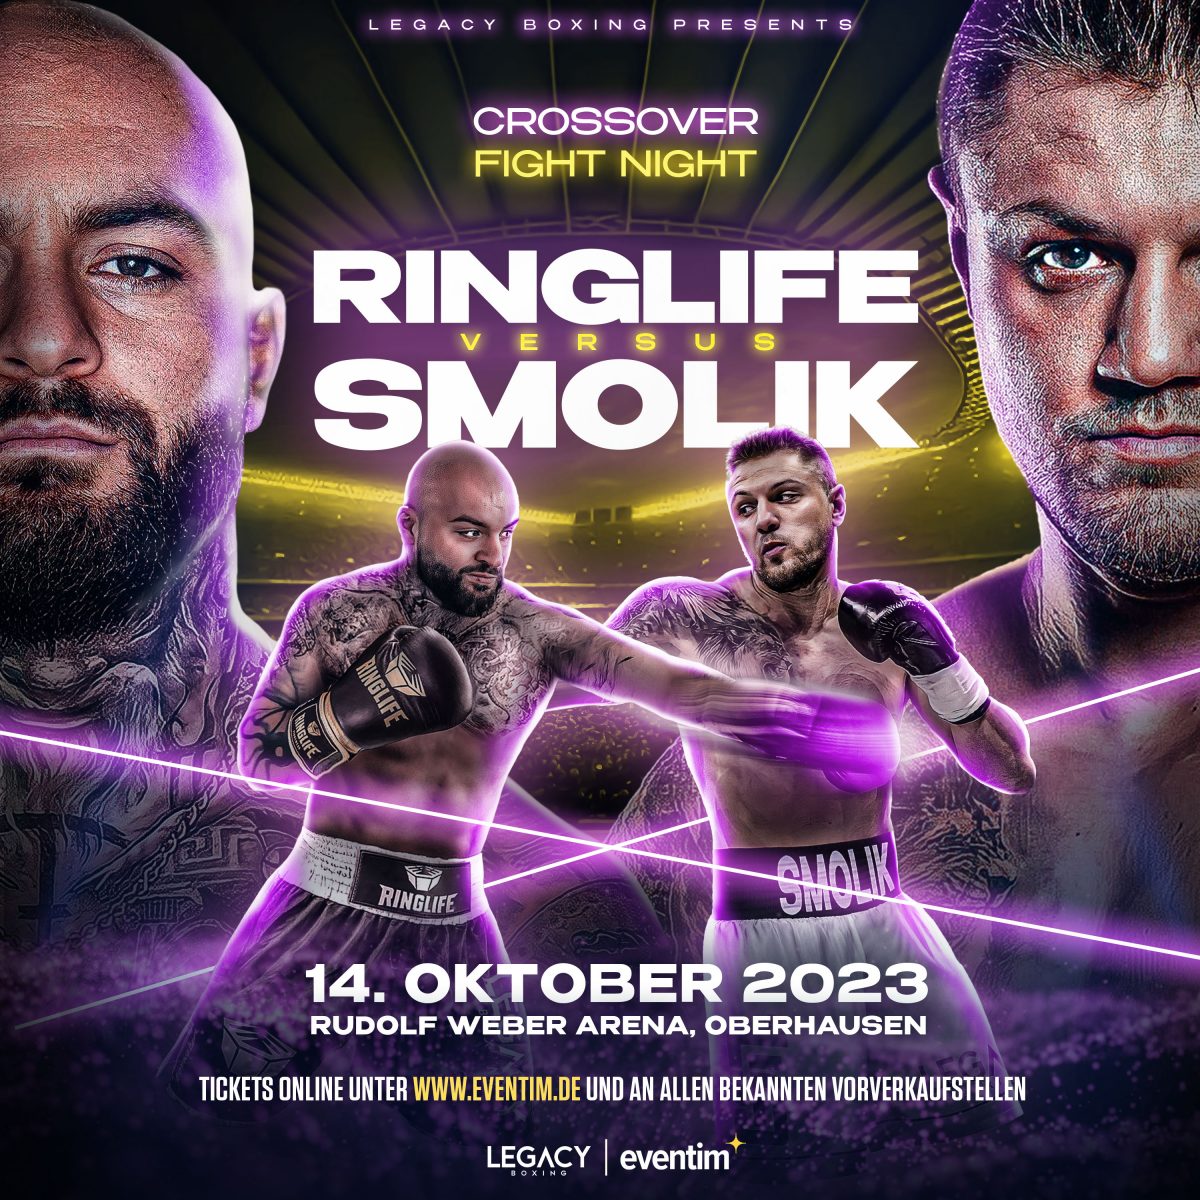 Ringlife vs. Smolik: Tickets für die Legacy Crossover Fight Night sichern